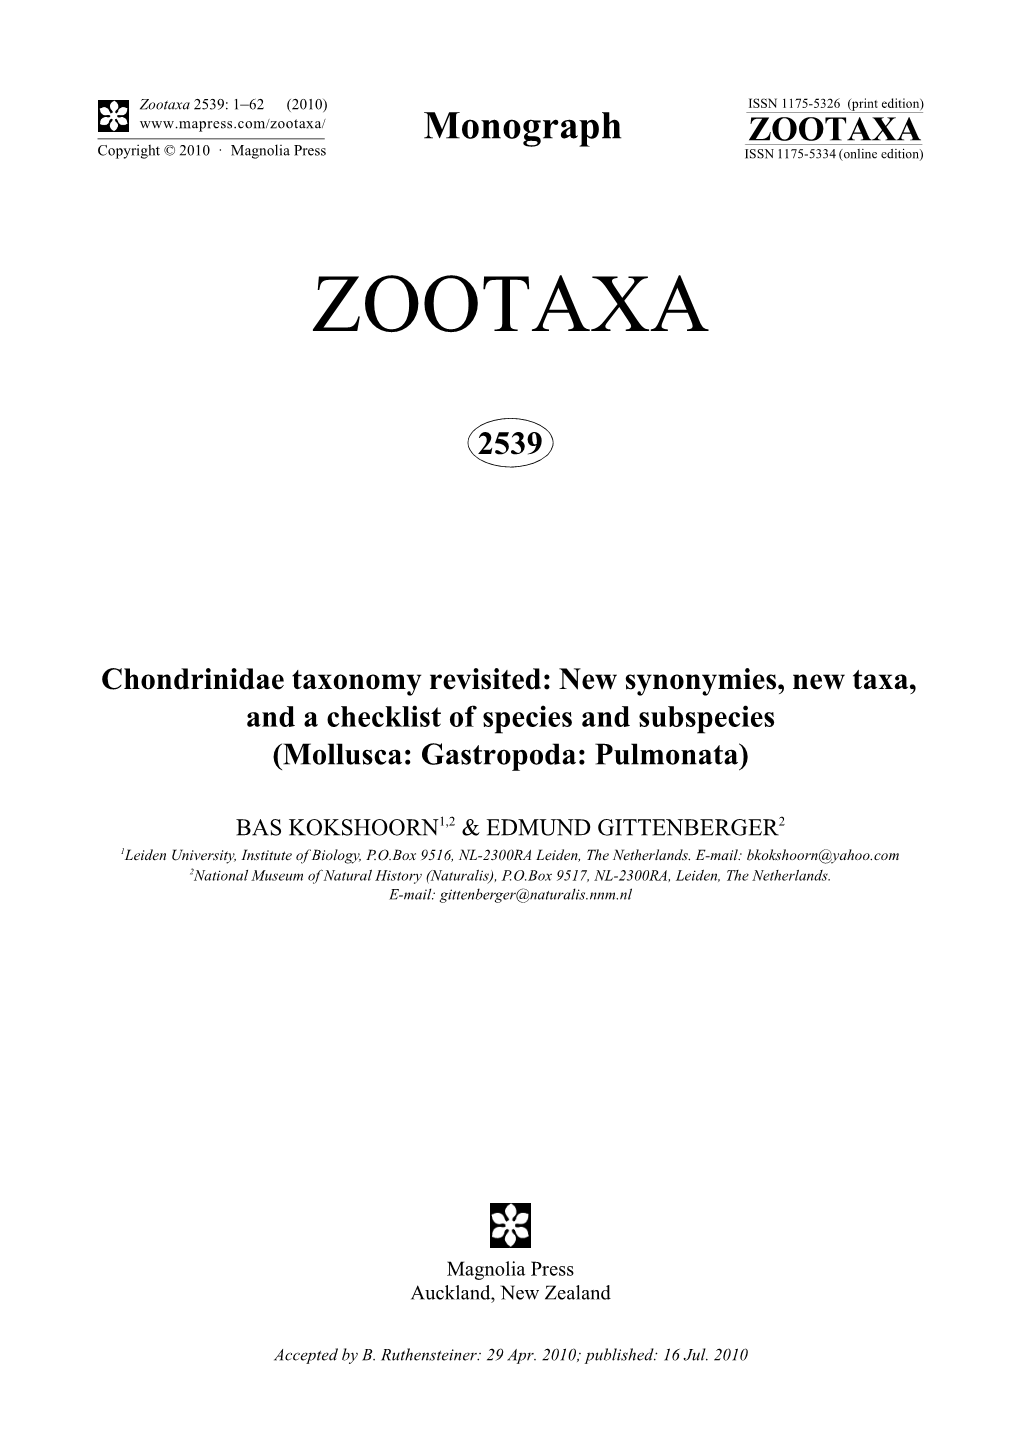 Zootaxa, Chondrinidae Taxonomy Revisited